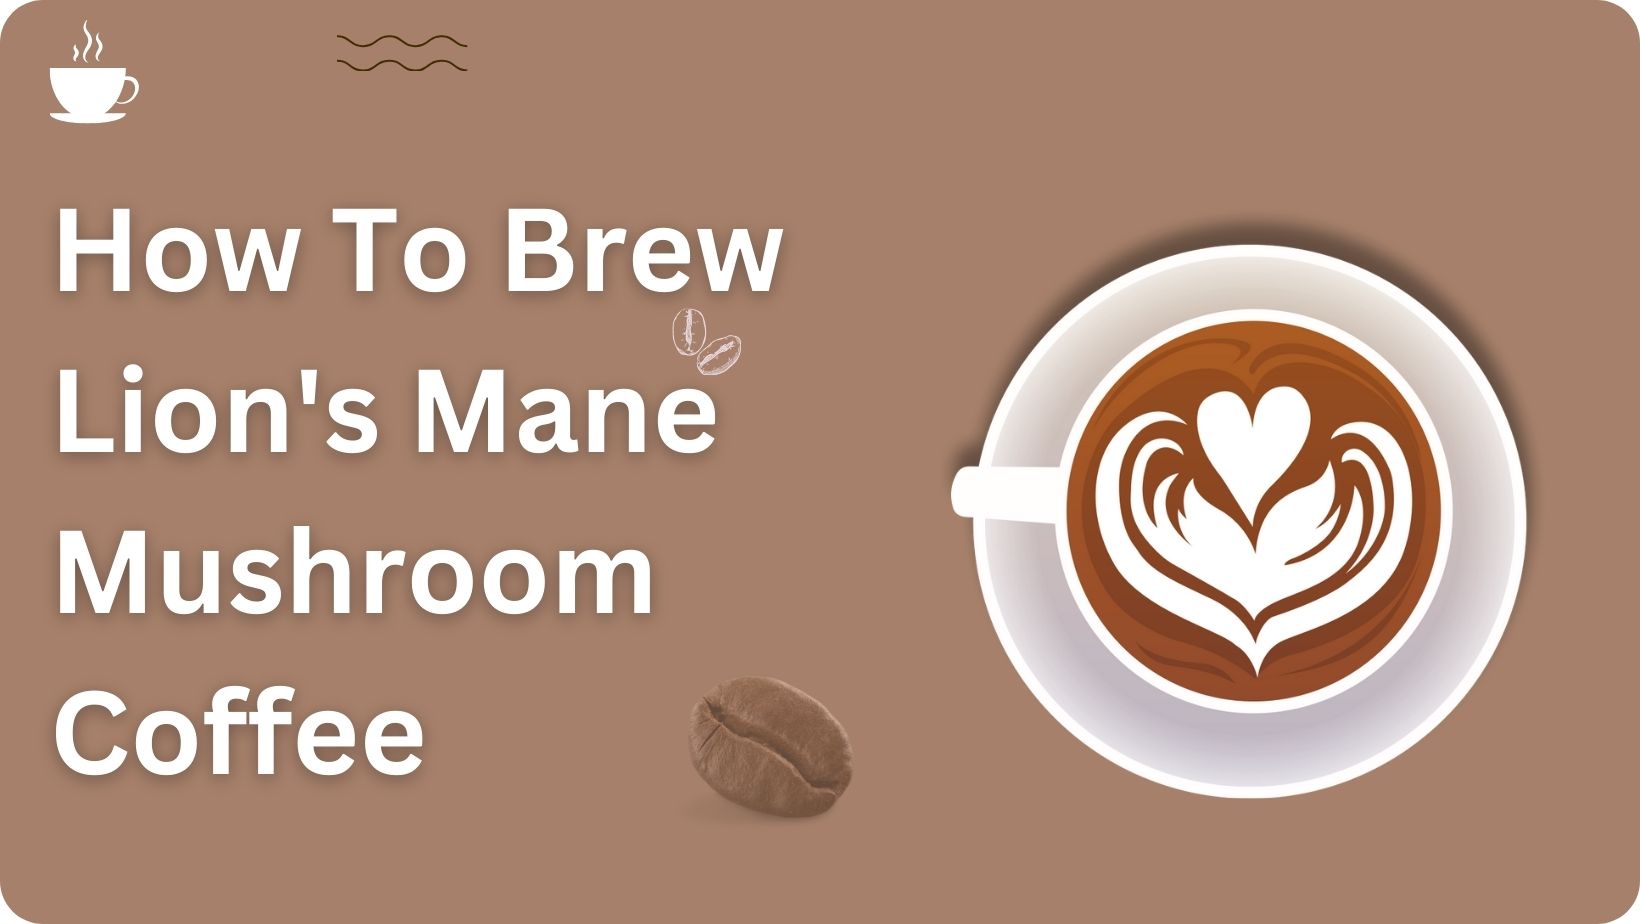 How To Brew Lion's Mane Mushroom Coffee?